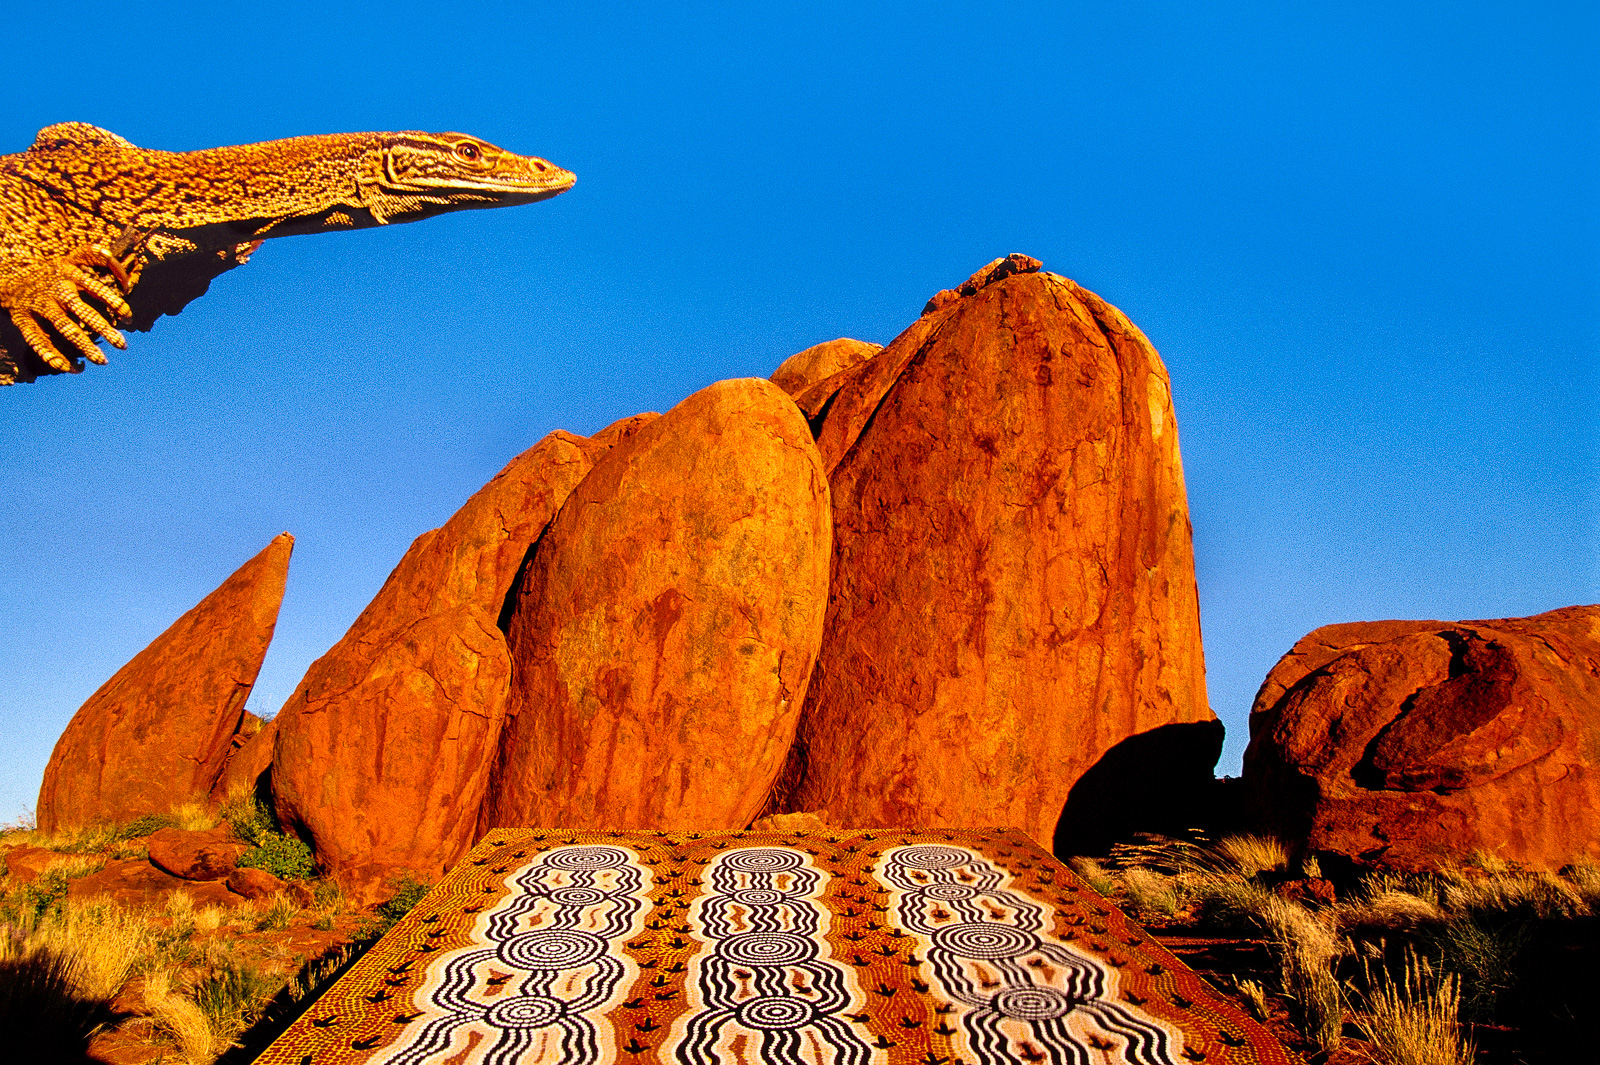 Goanna and aboriginal art, Central Australia